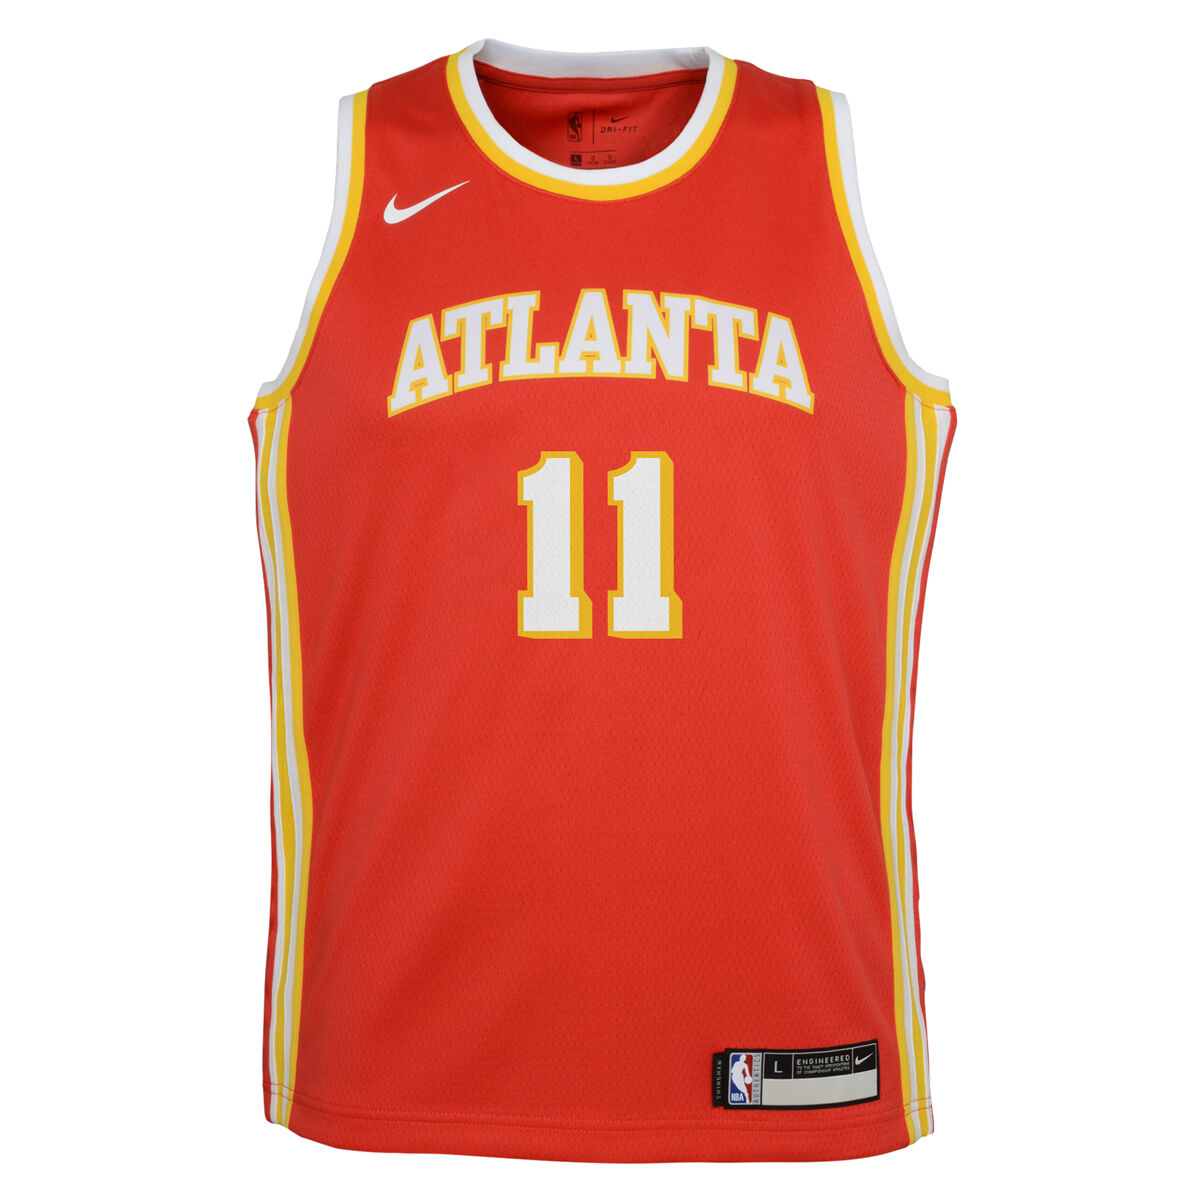 Atlanta Hawks jersey price